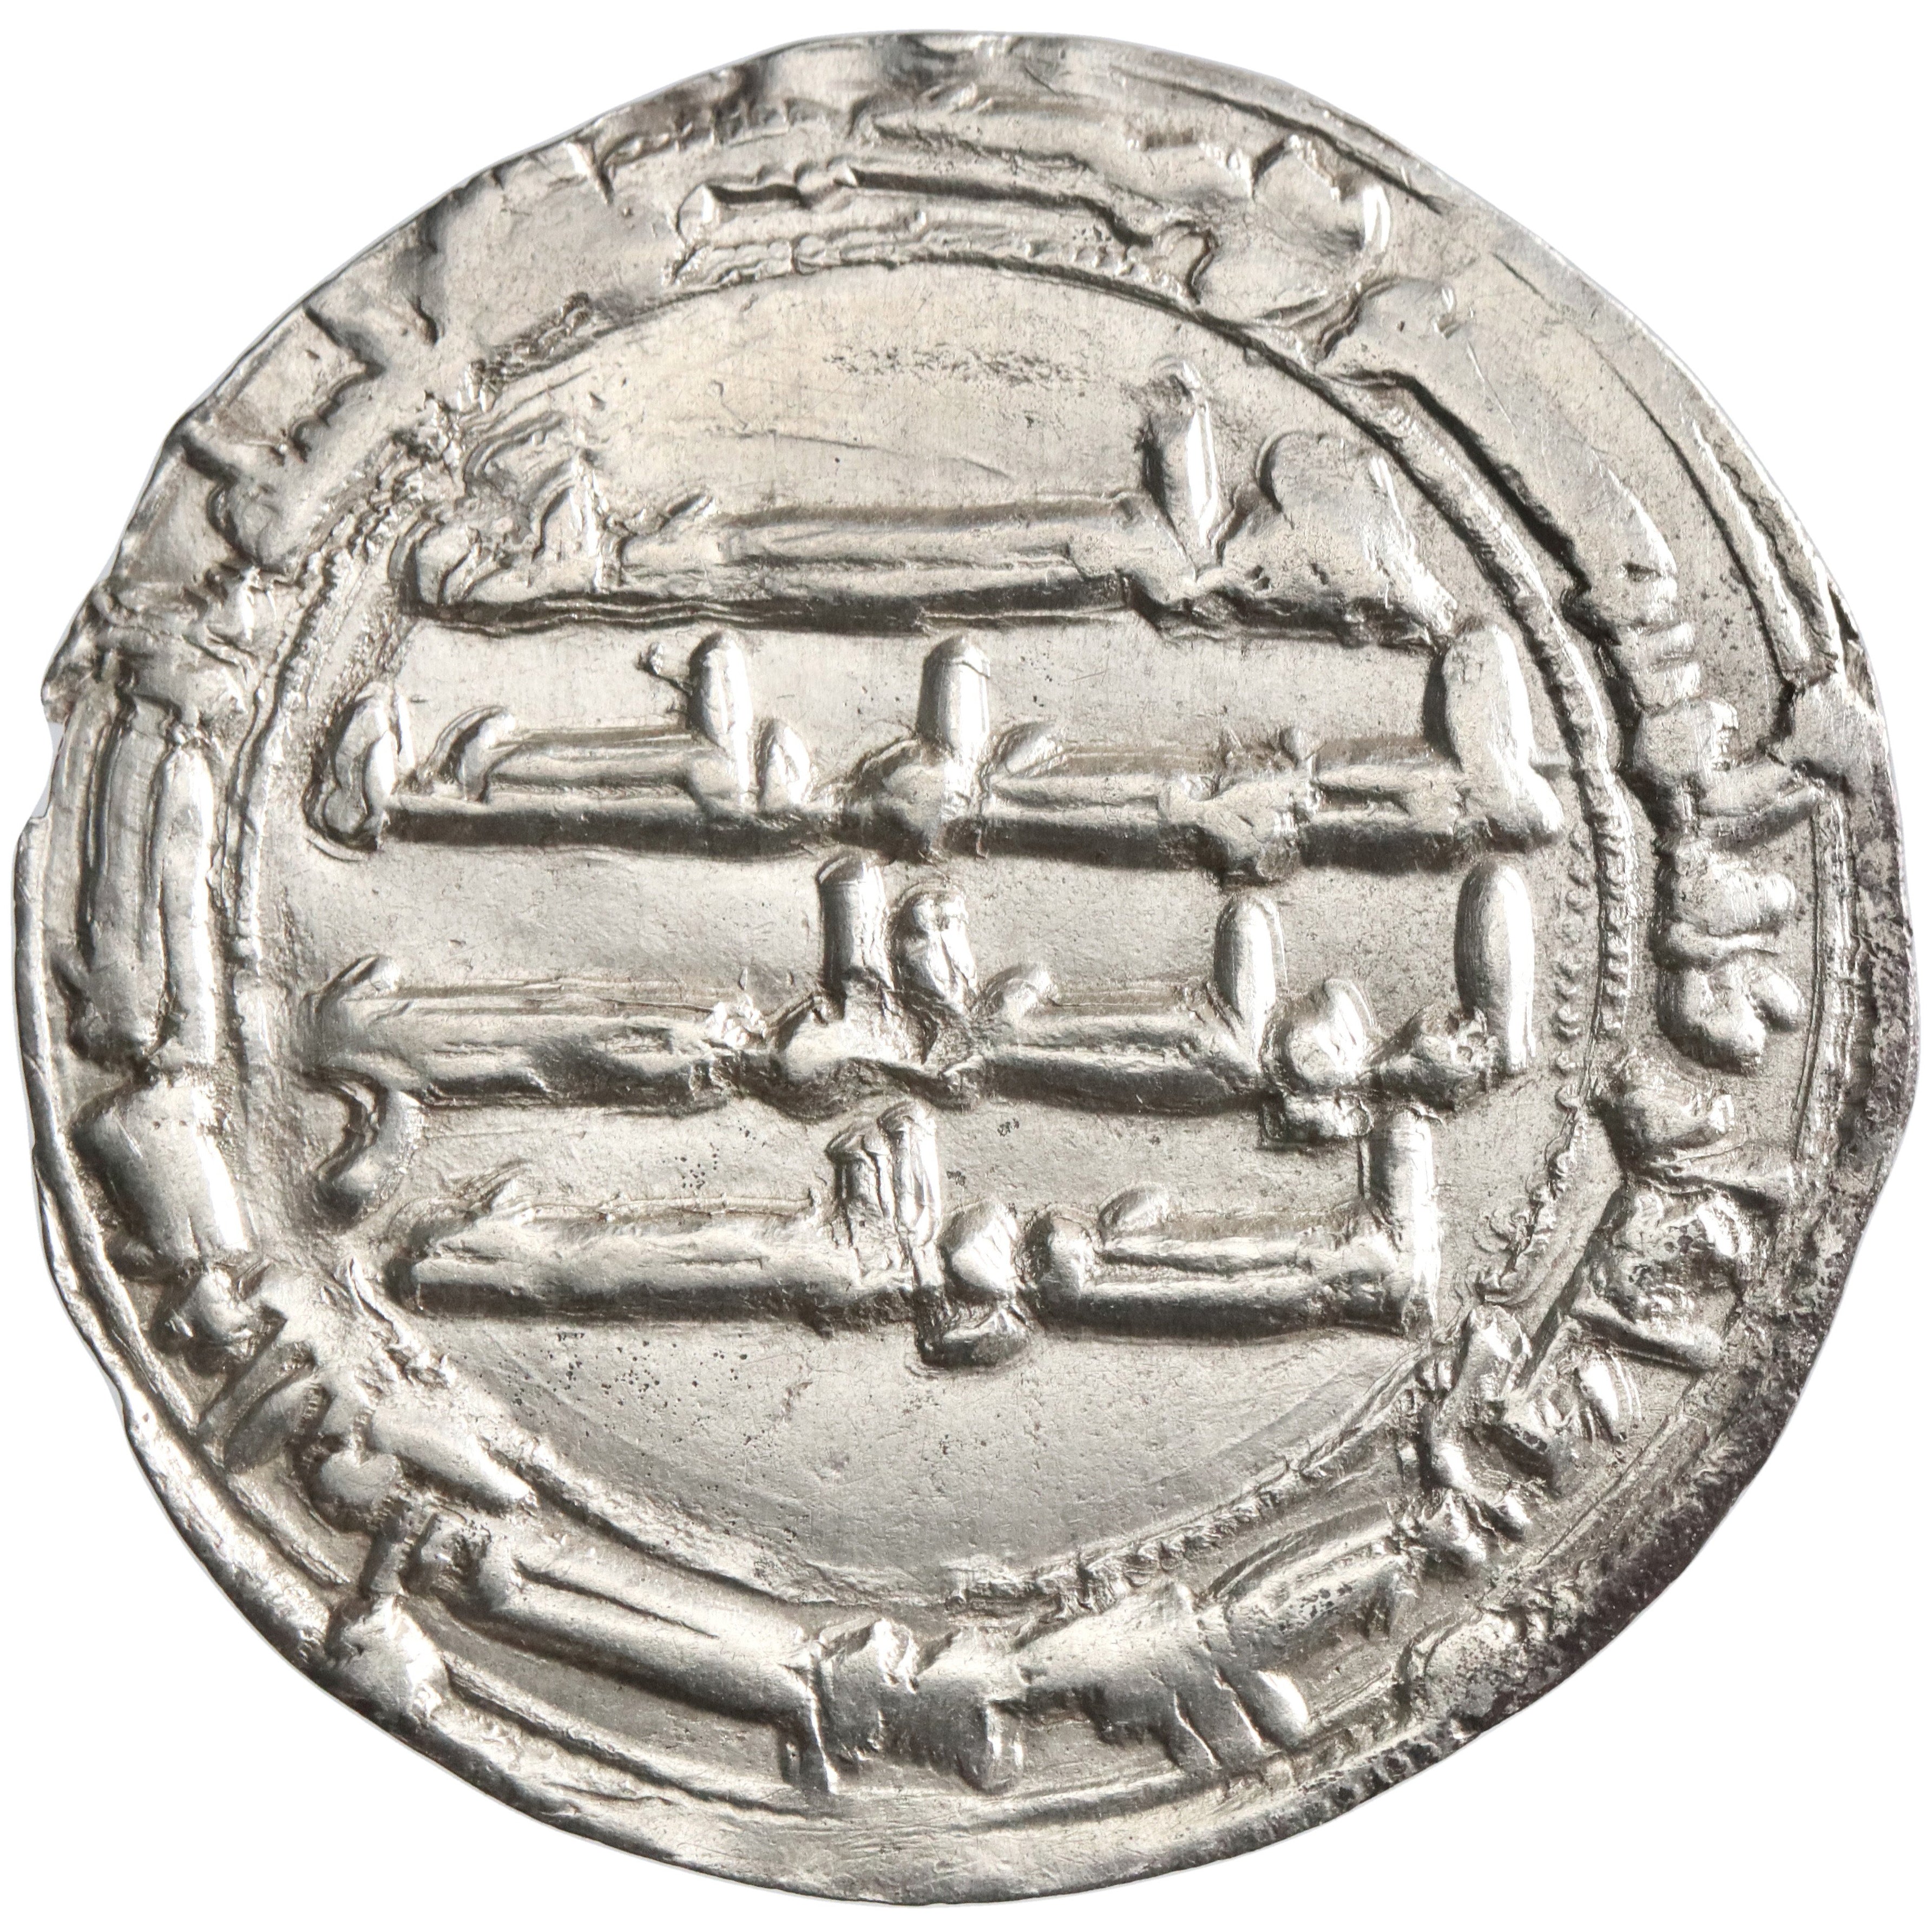 Umayyad of Spain, 'Abd al-Rahman I, silver dirham, al-Andalus (Spain) mint, AH 163